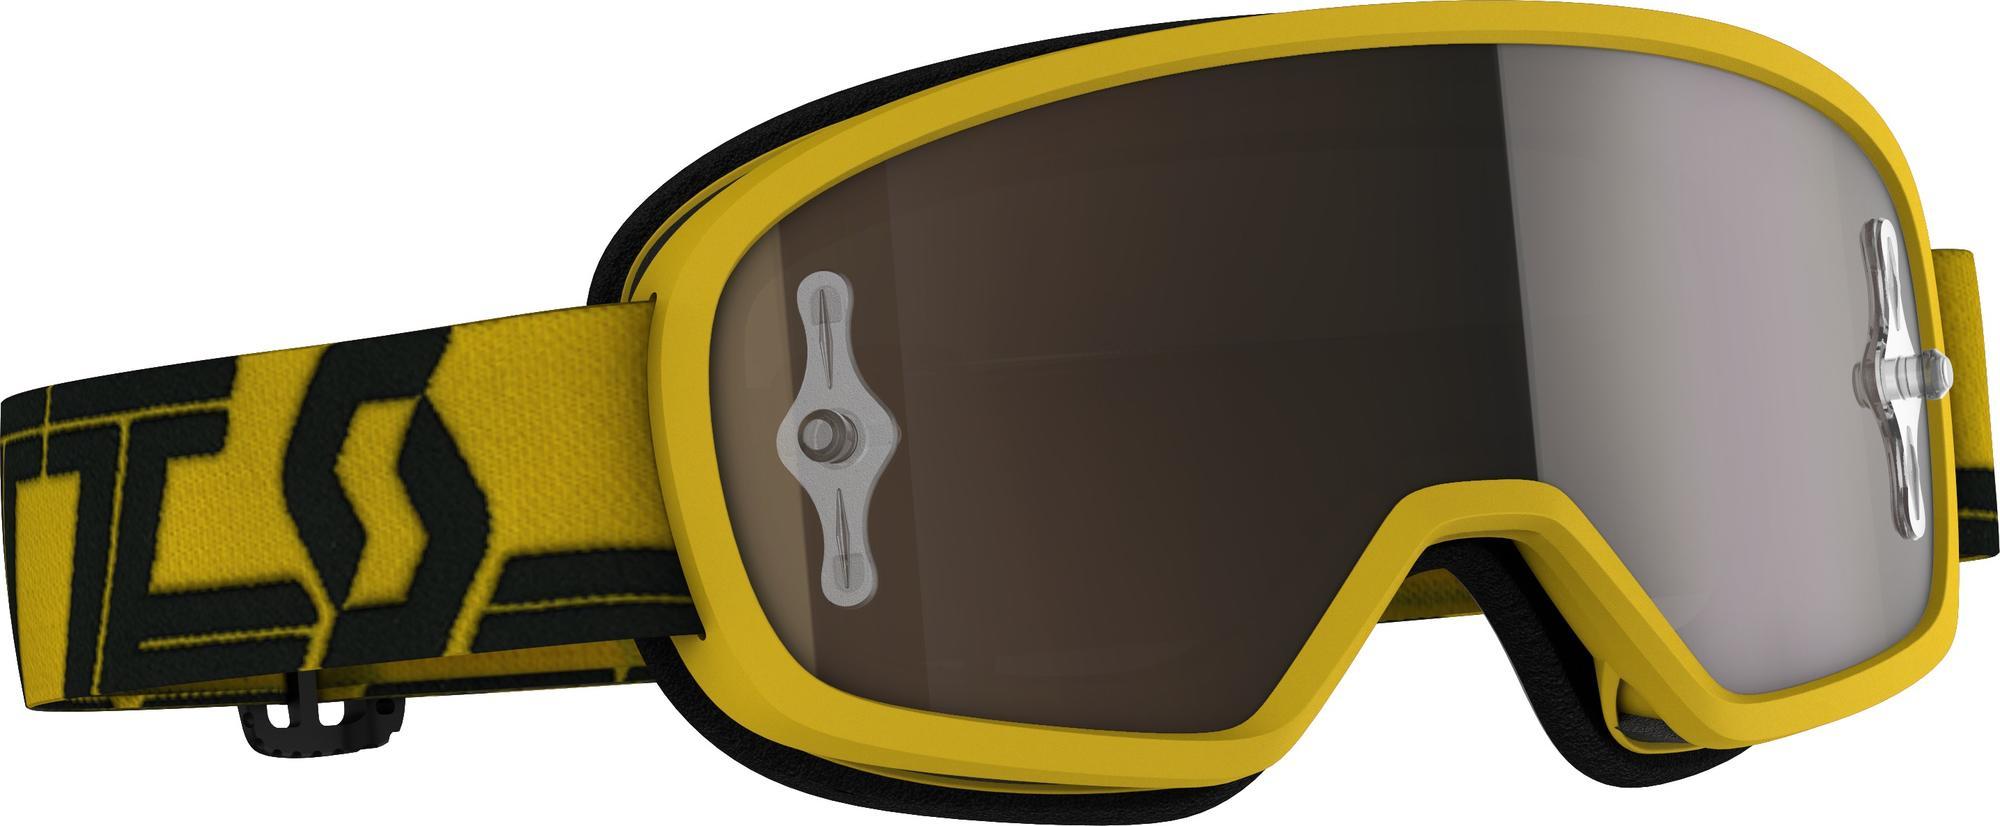 Scott Goggle Buzz MX Pro yellow/black (1017)